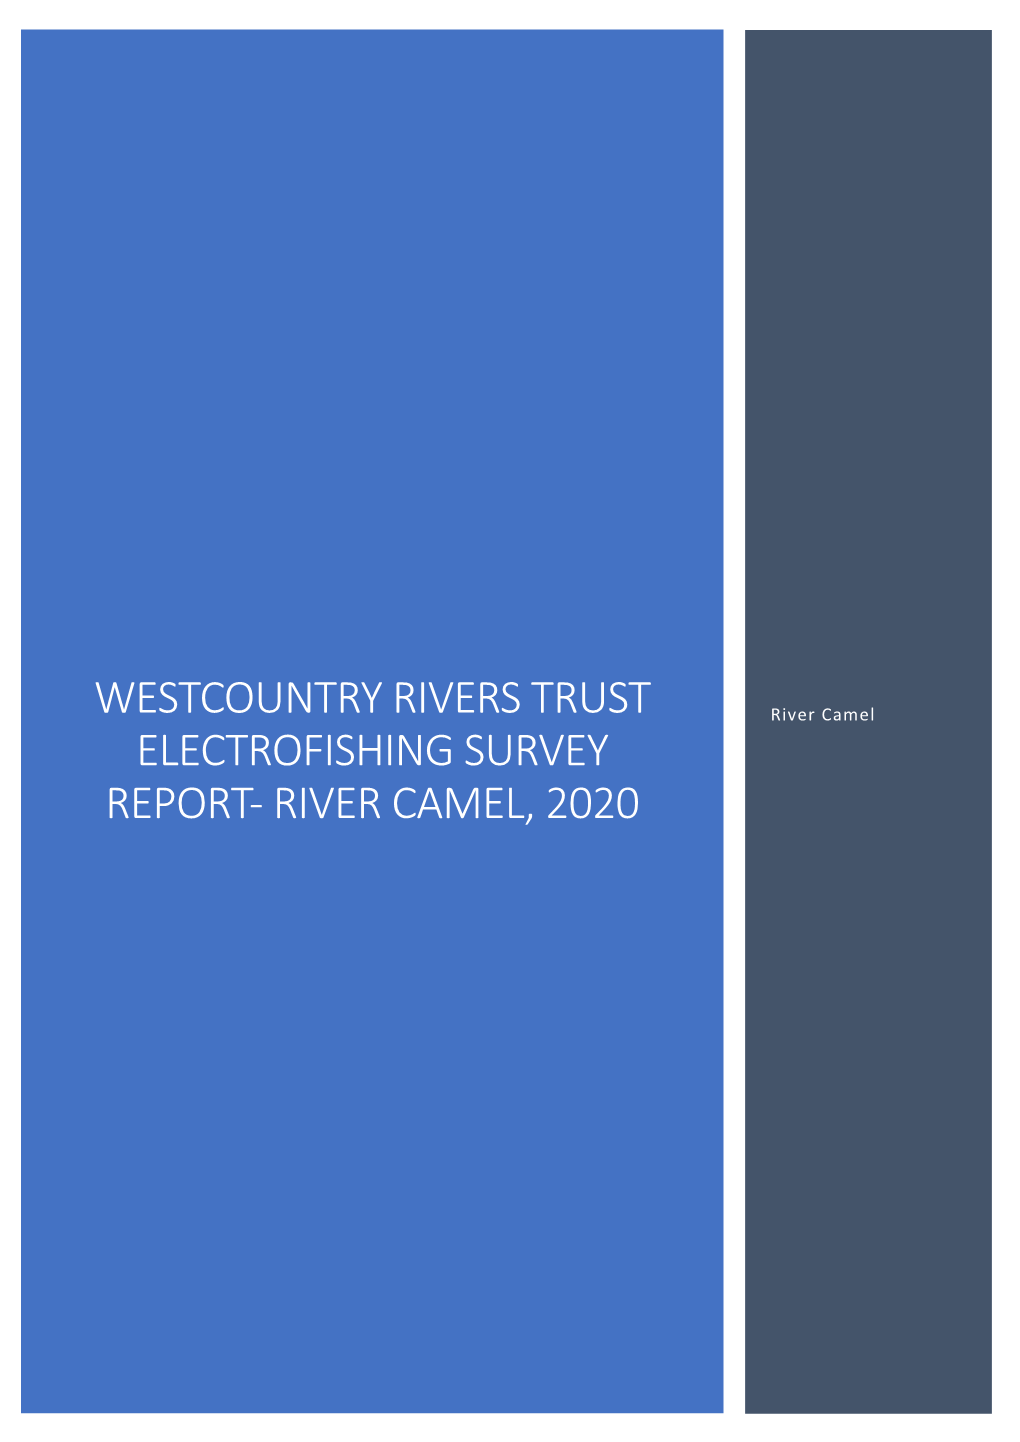 Westcountry Rivers Trust Electrofishing Survey Report- River Camel, 2020